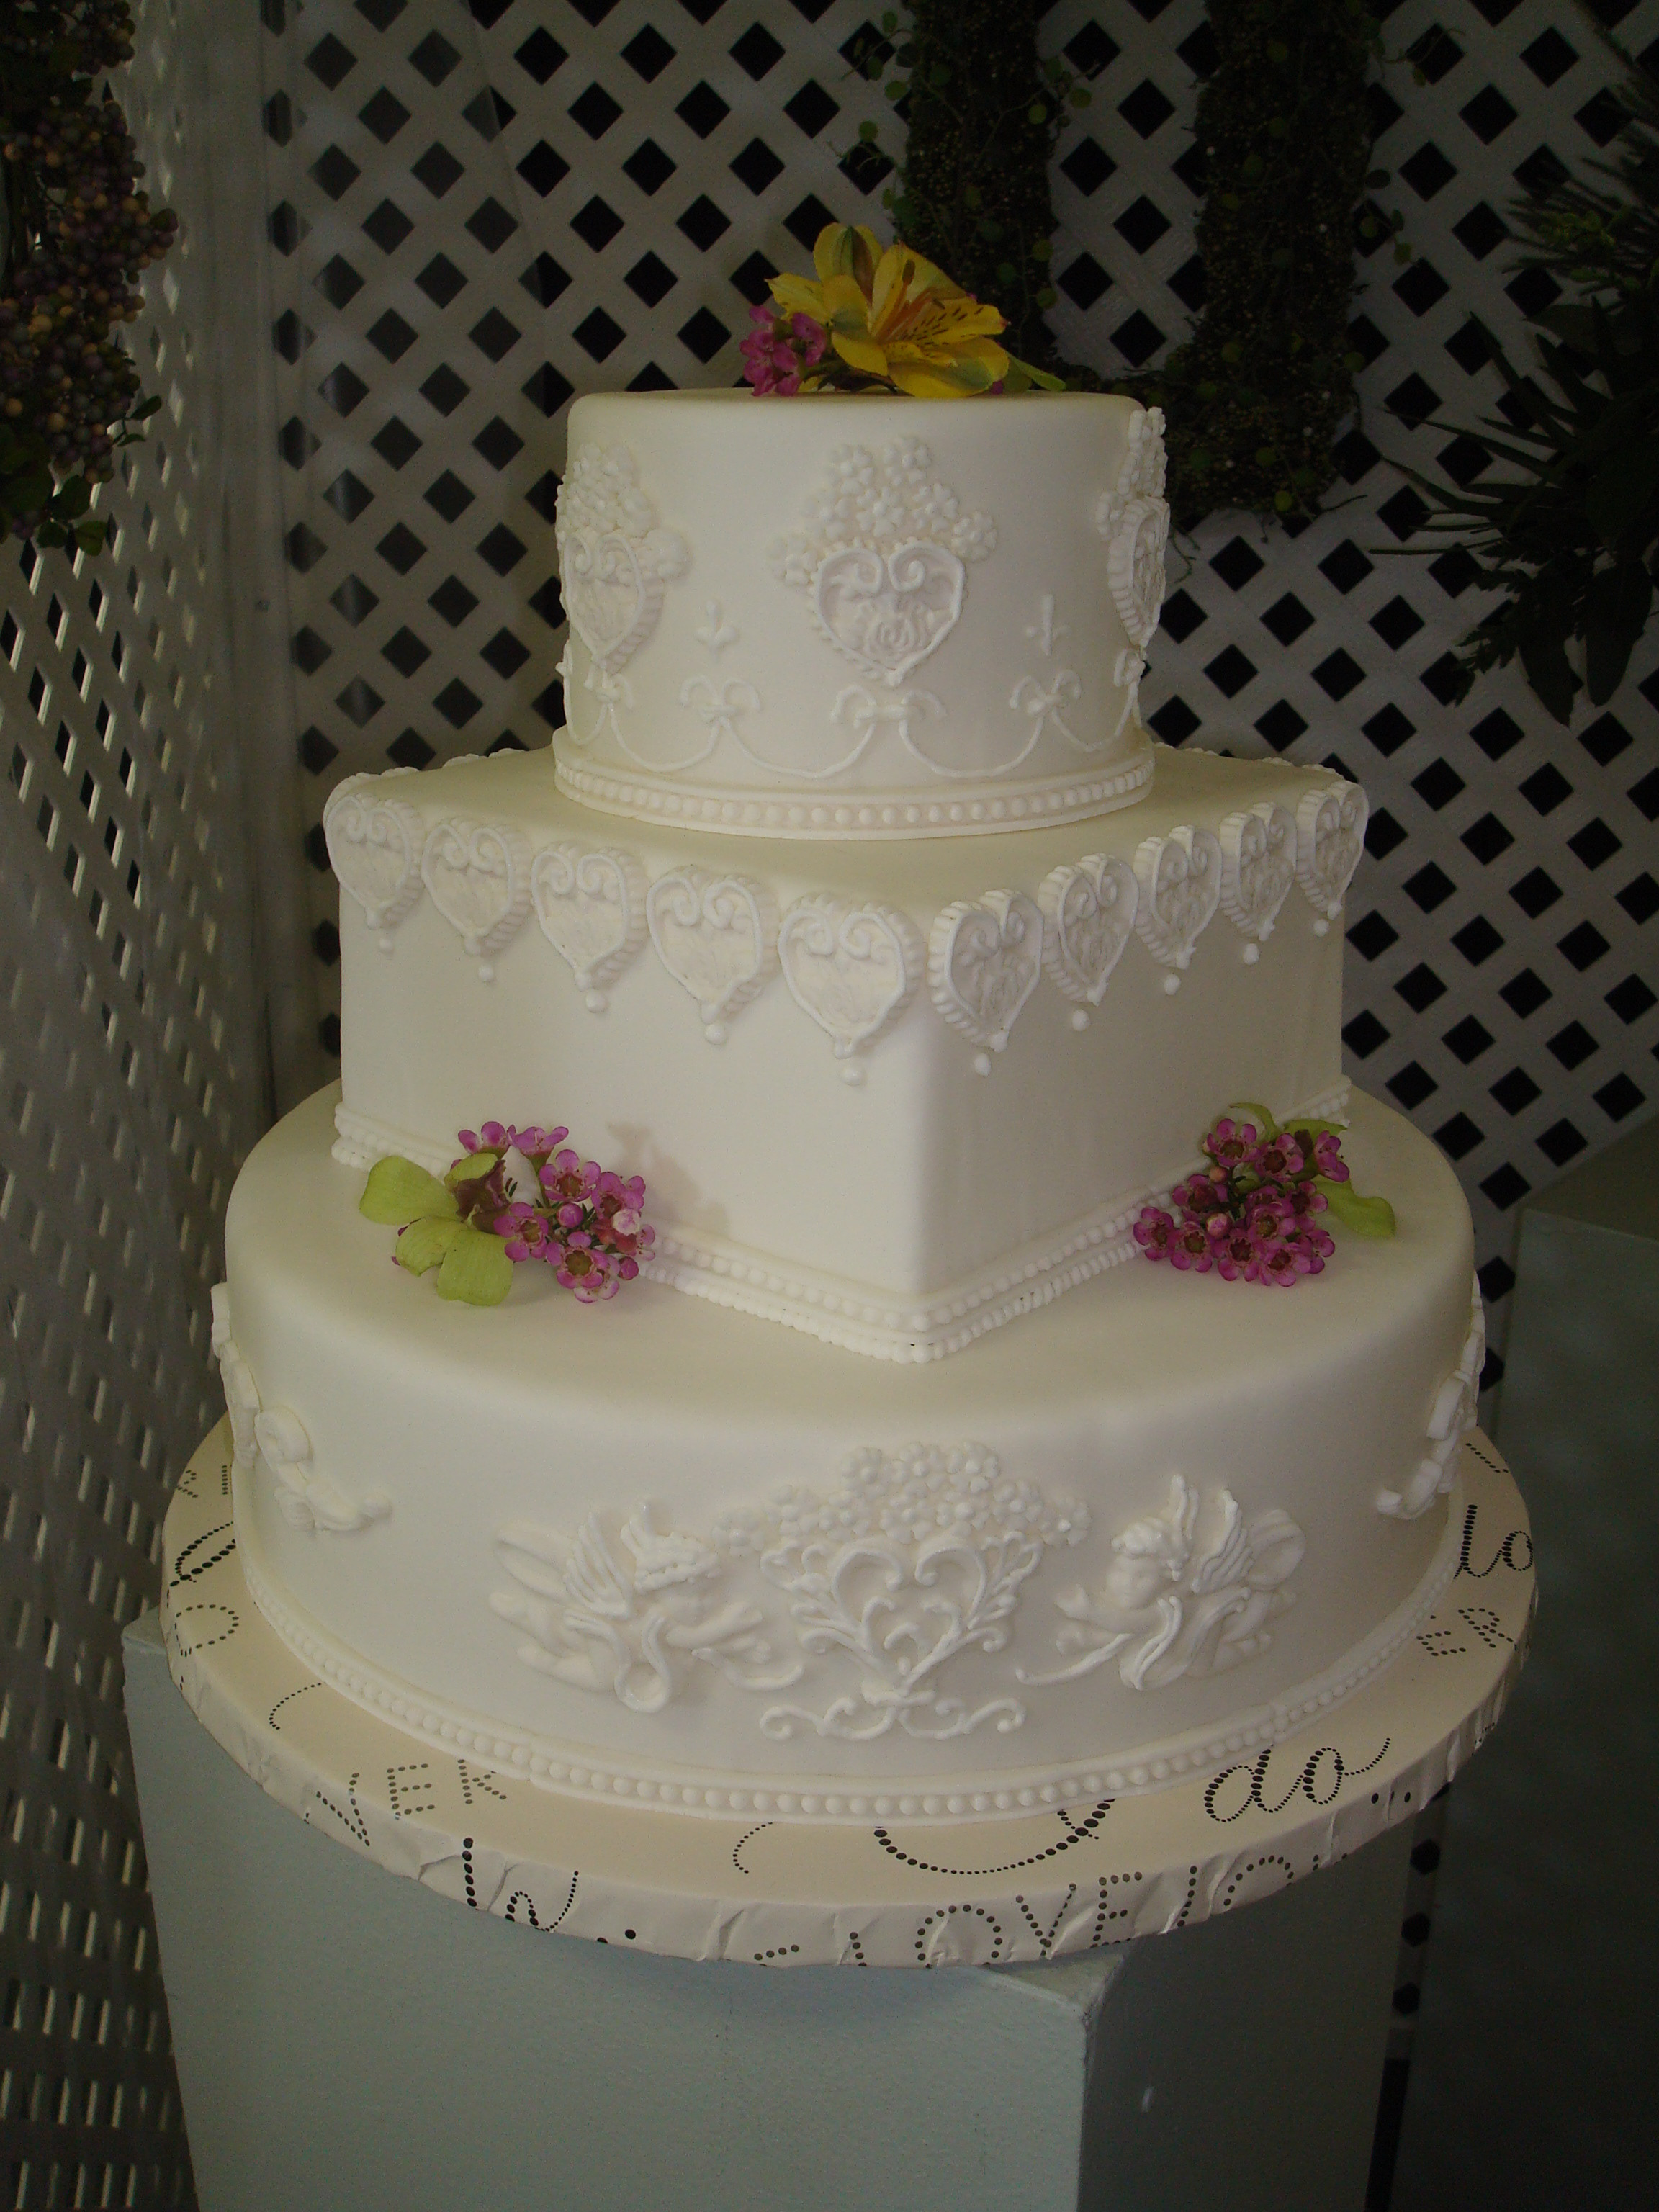 Wedding Cakes From Costco
 Cosco wedding cakes idea in 2017